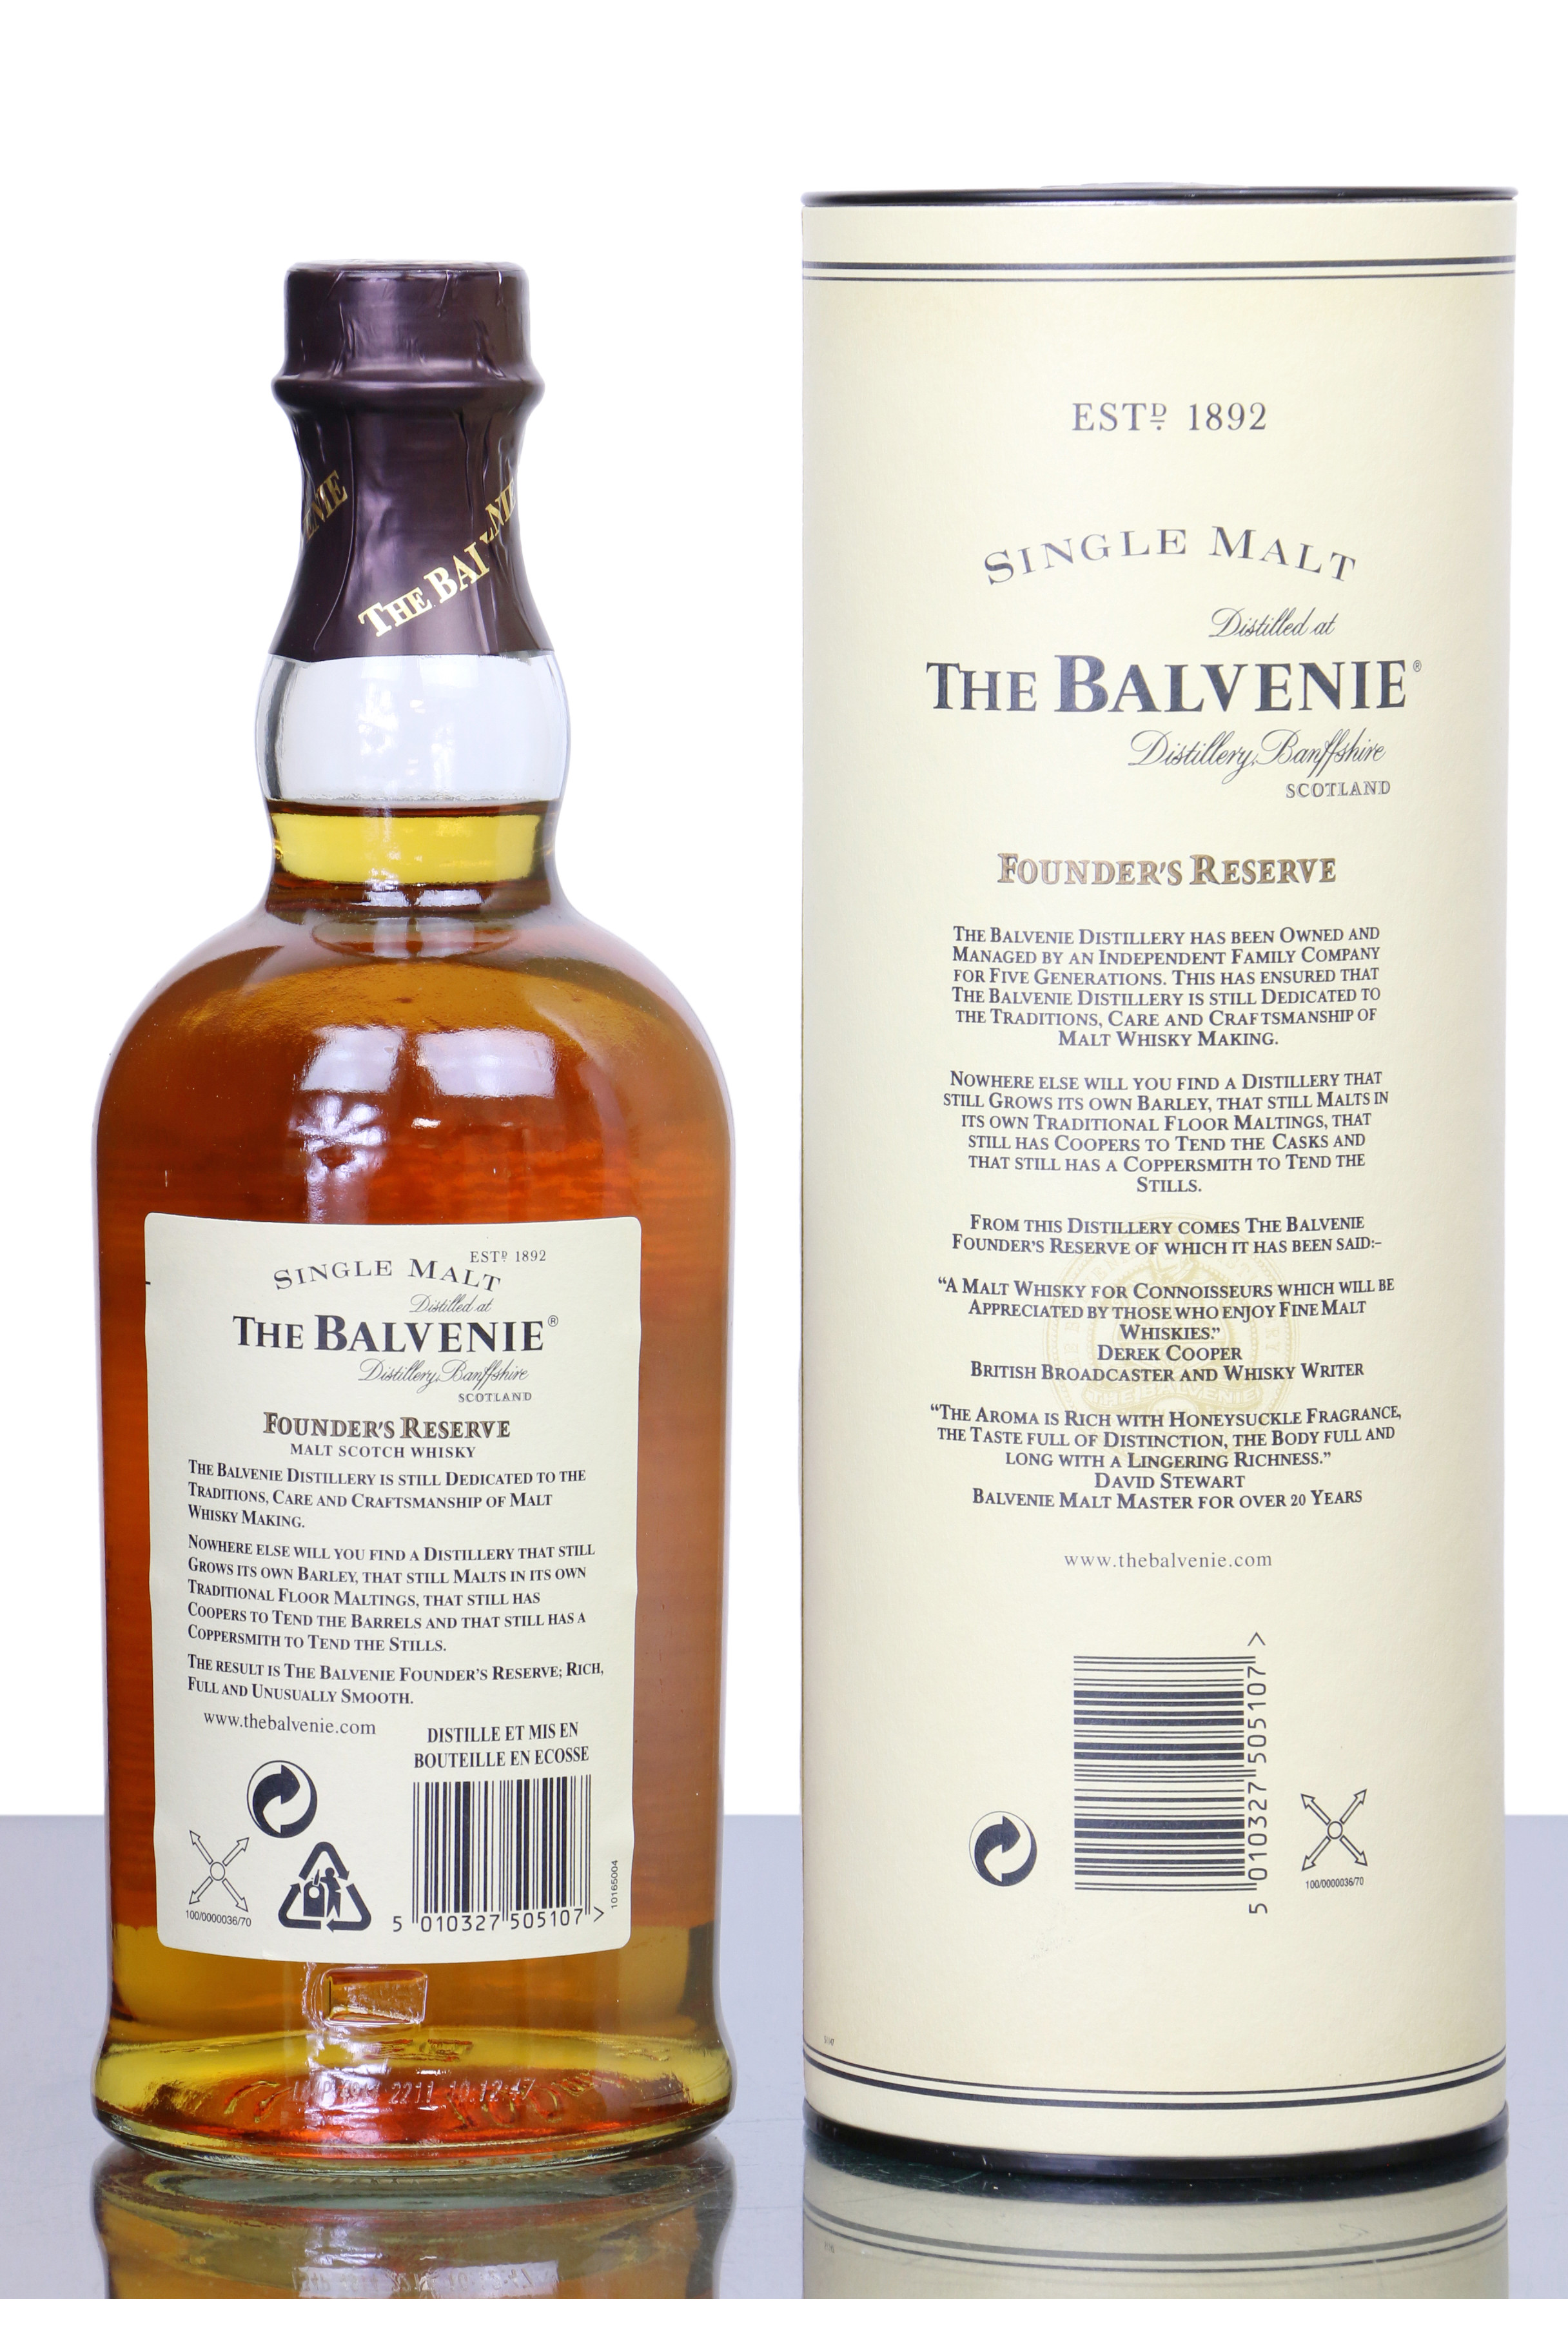 Balvenie single malt founders reserve